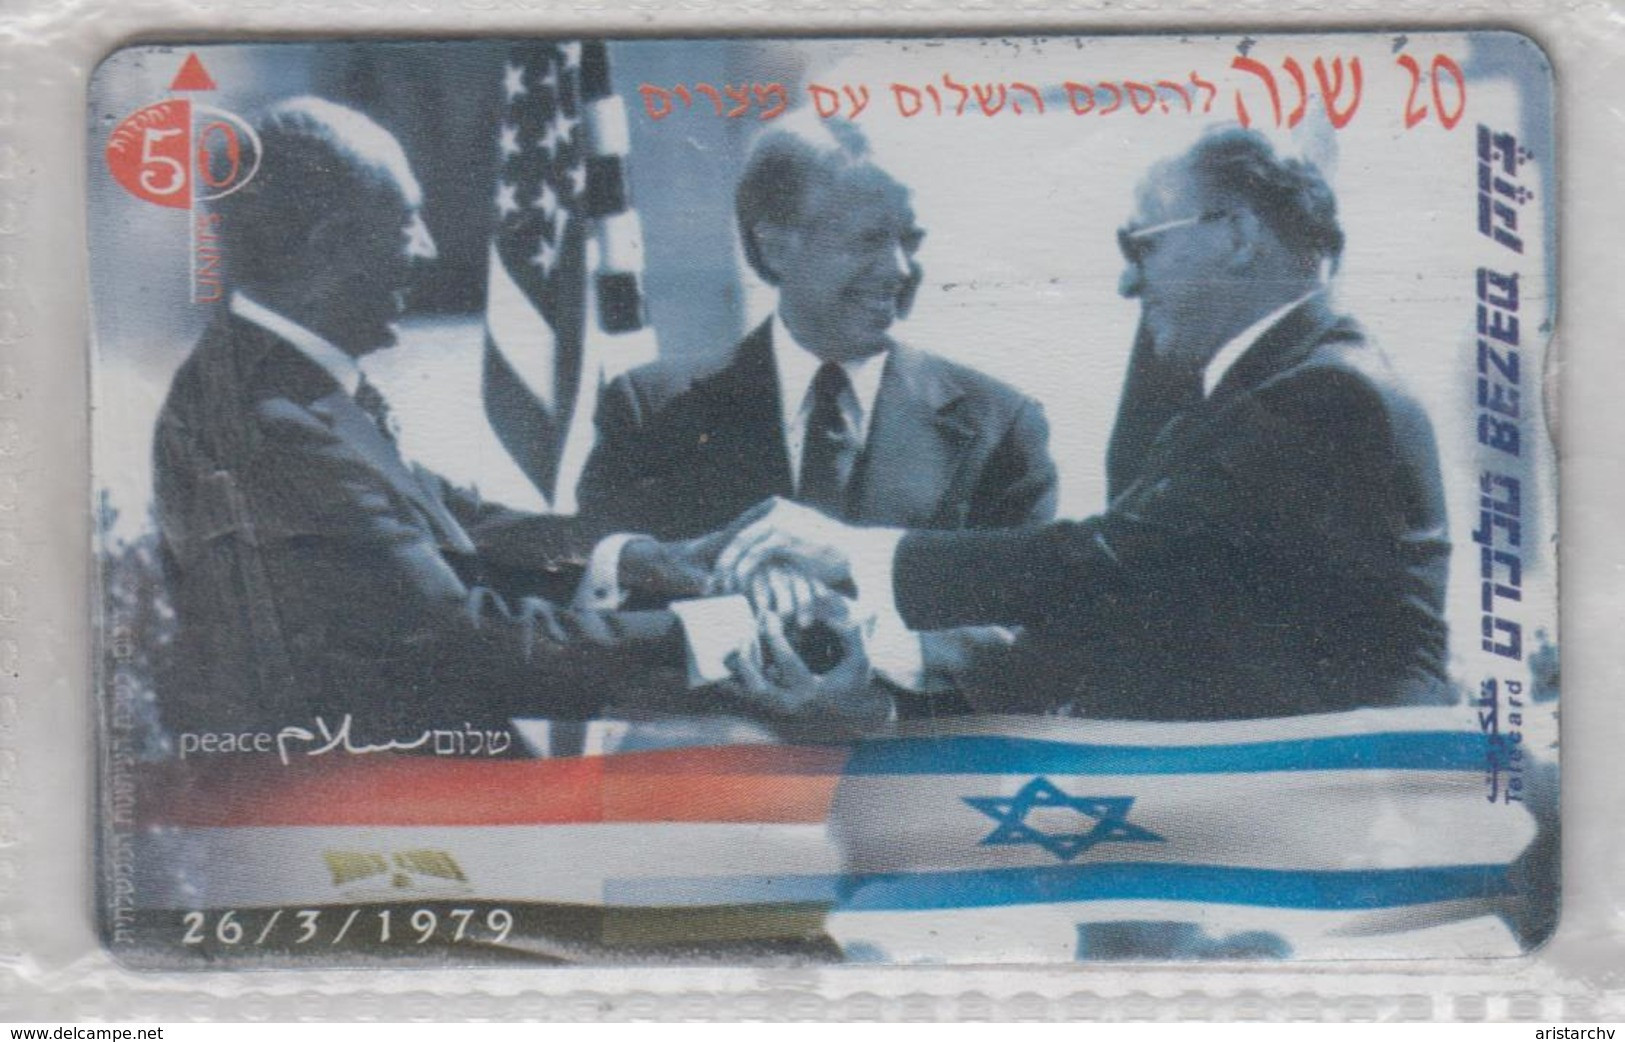 ISRAEL 1999 PEACE AGREEMENT MENACHEM BEGIN JIMMY CARTER ANWAR SADAT USED PHONE CARD - Israel